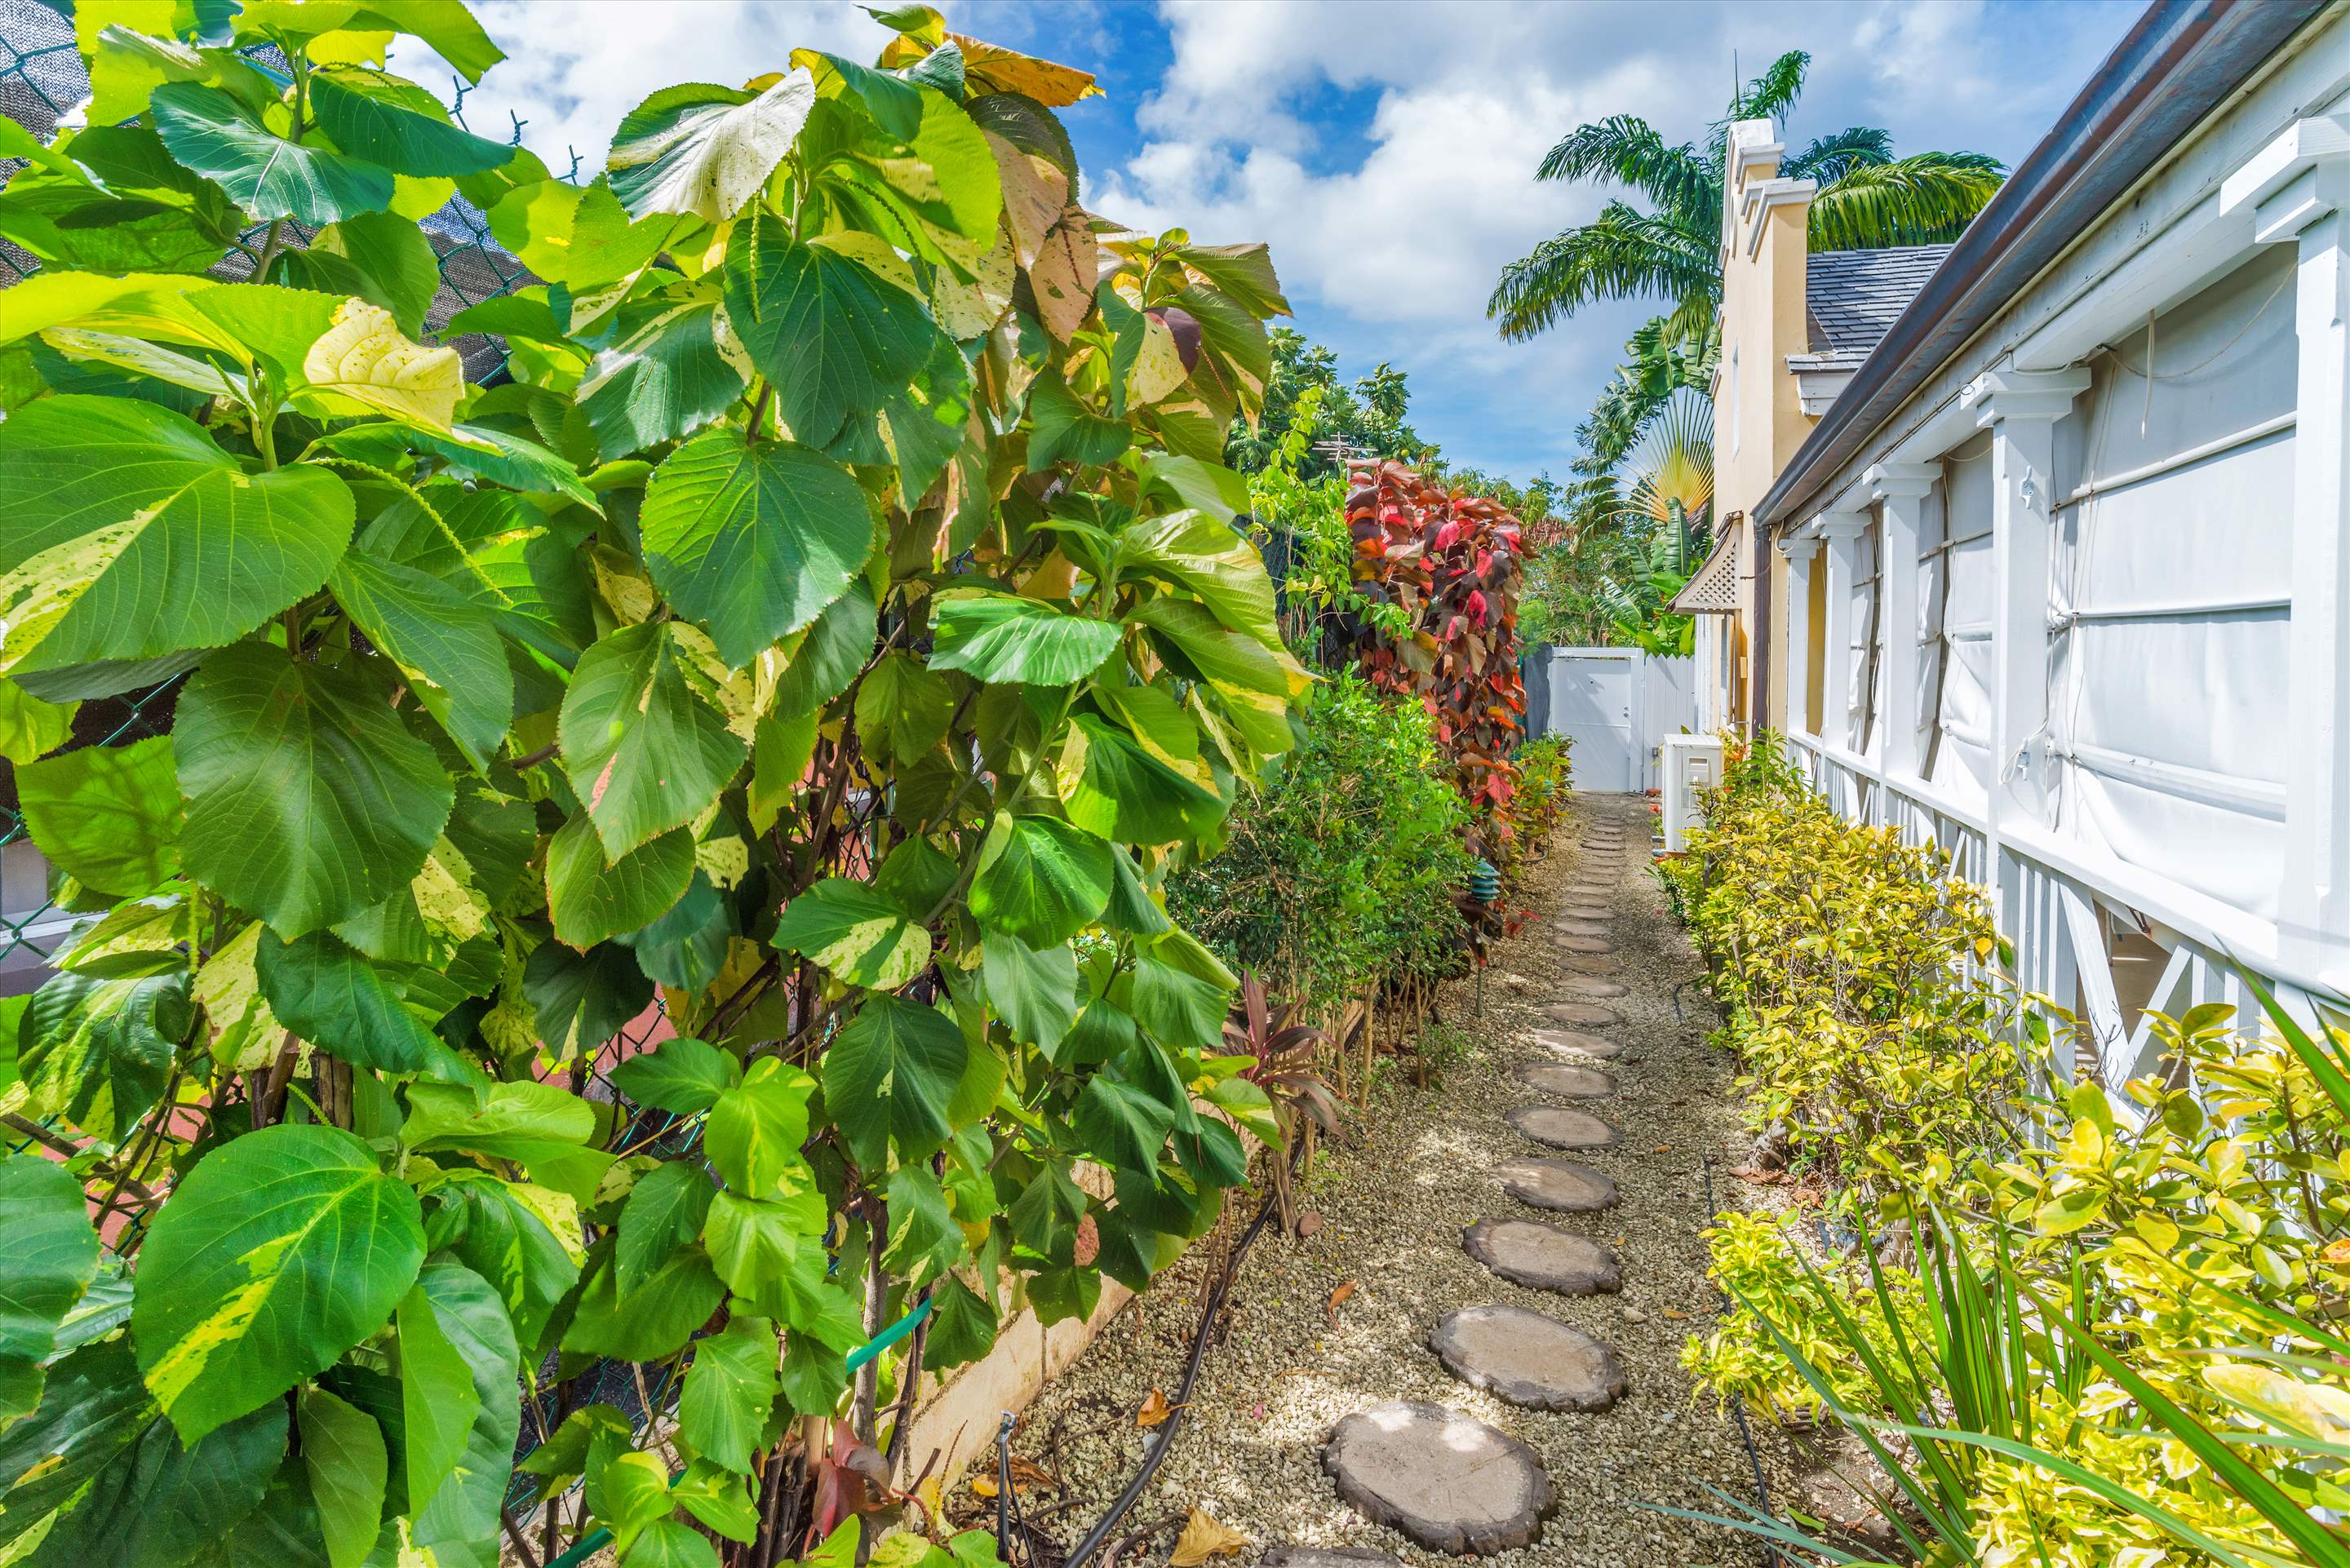 Porters Court 3, 1 bedroom, 1 bedroom villa in St. James & West Coast, Barbados Photo #13